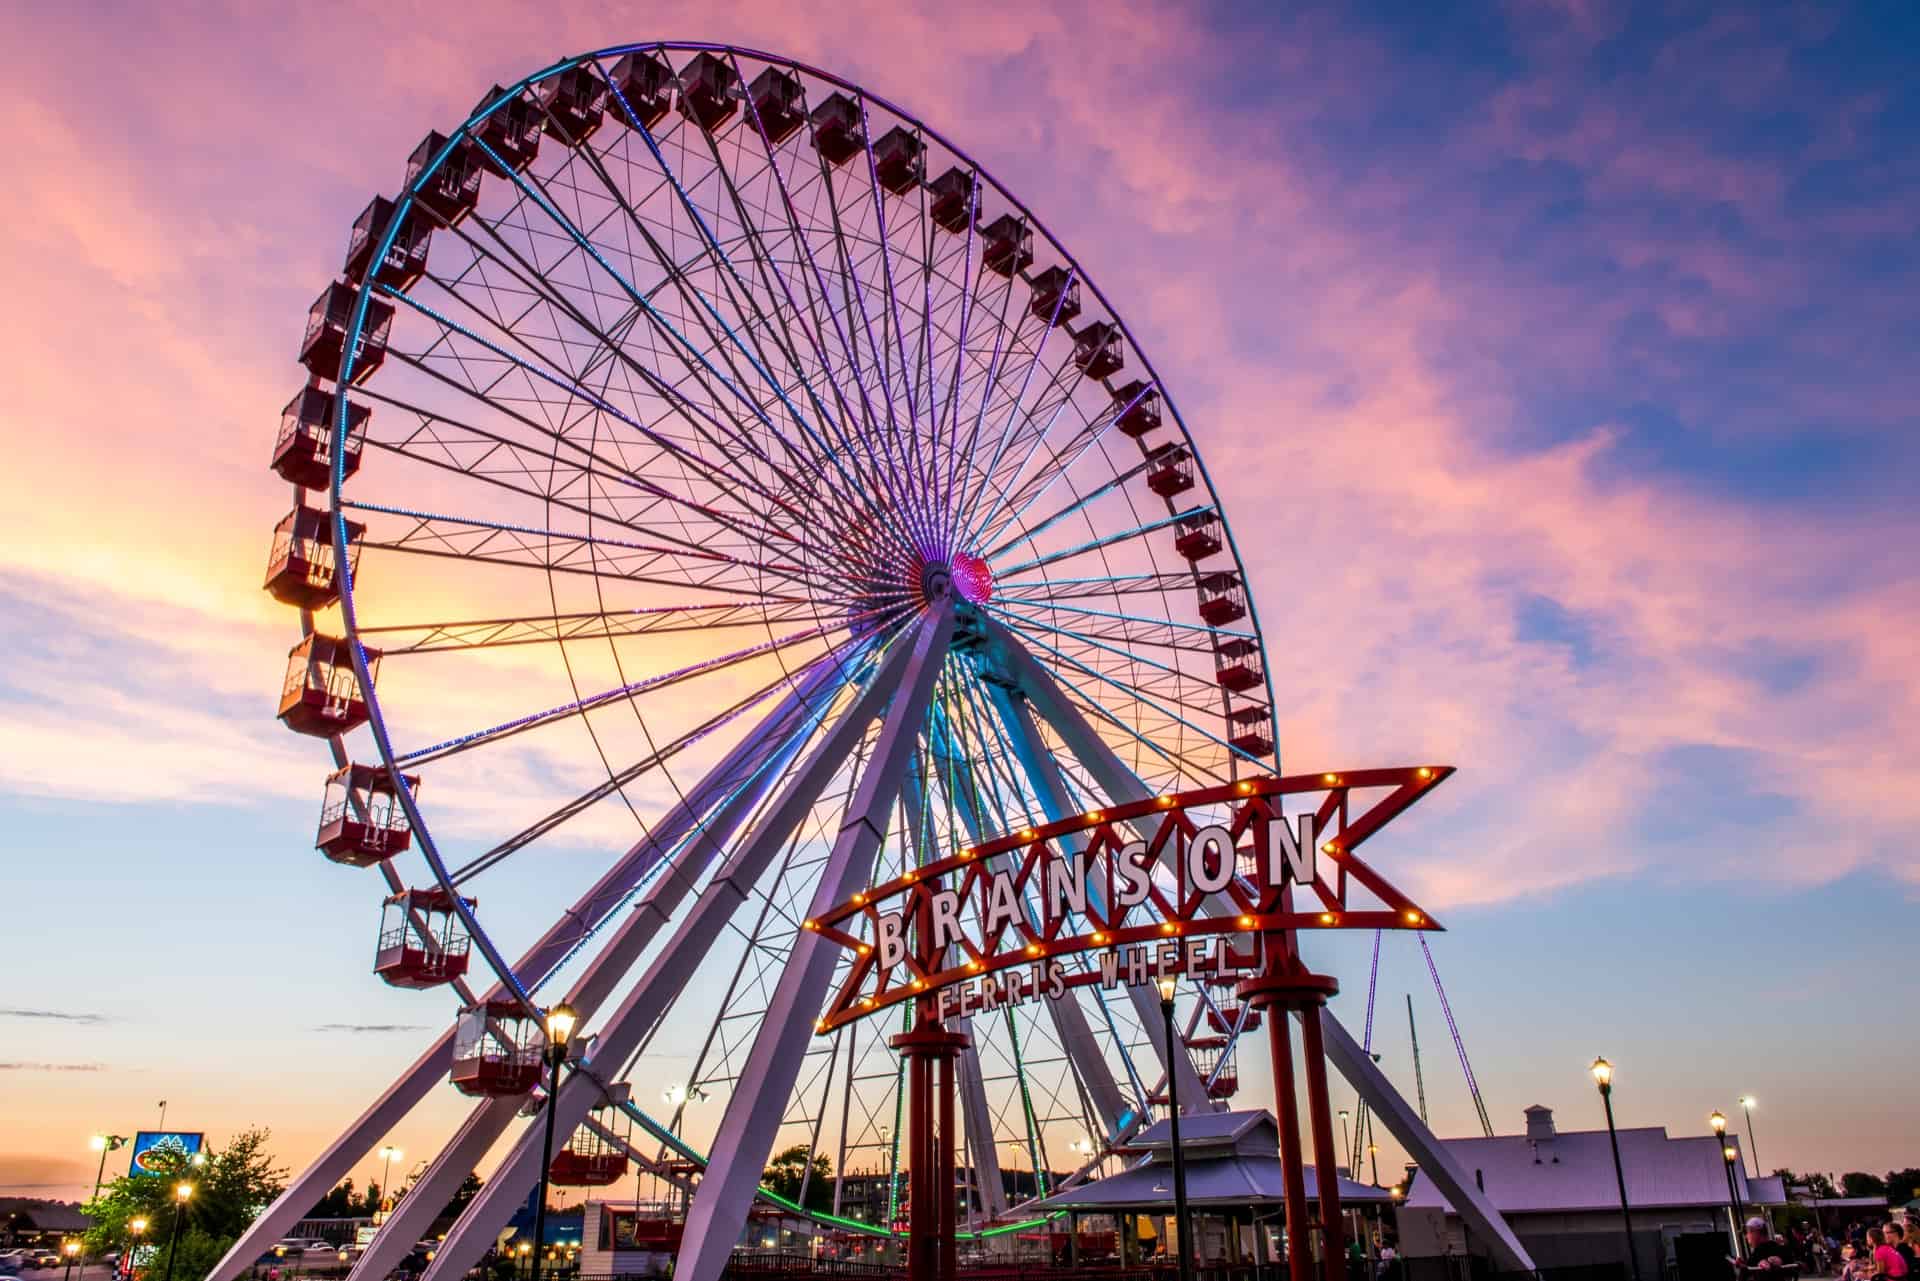 The Branson Ferris Wheel Is A Top Branson Missouri Attraction